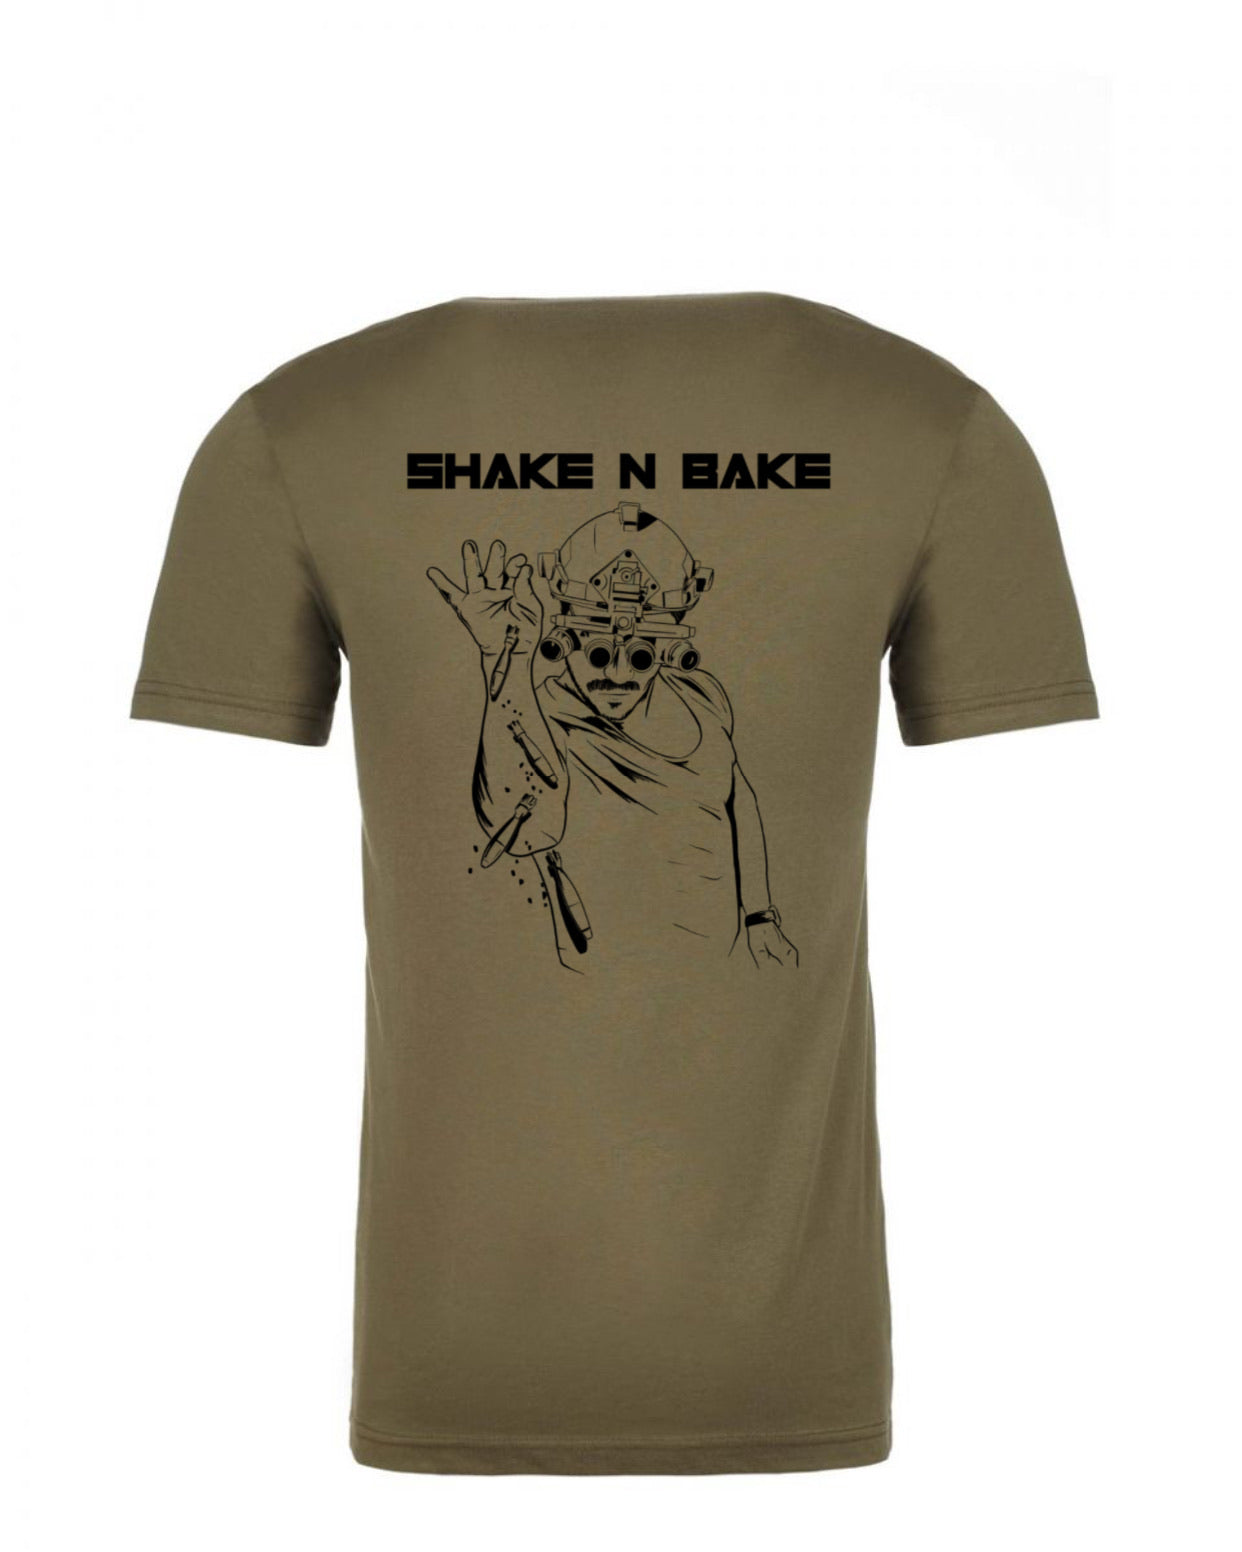 Shake’n’Bake Tee